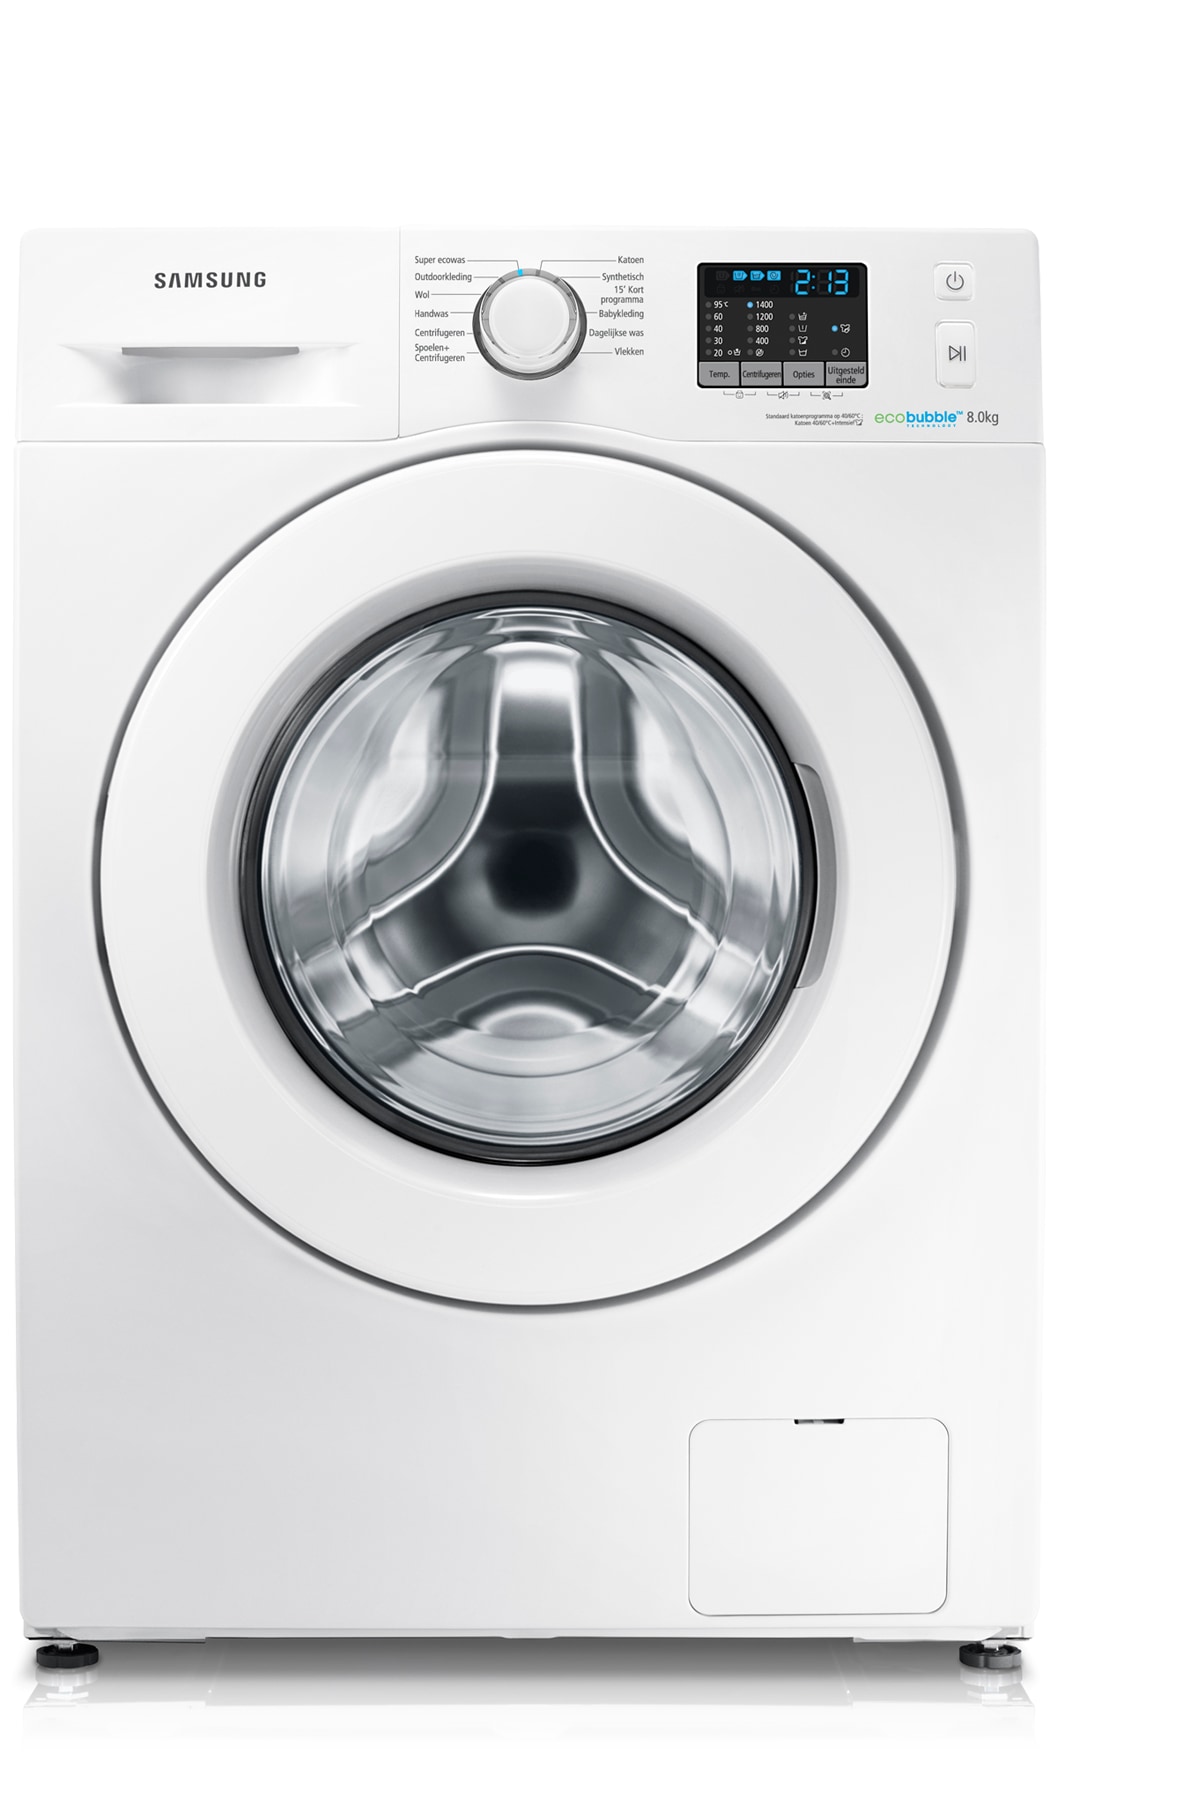 Opknappen Aap markt A+++ EcoBubble 1400 toeren 8 KG Wasmachine | Samsung Service NL